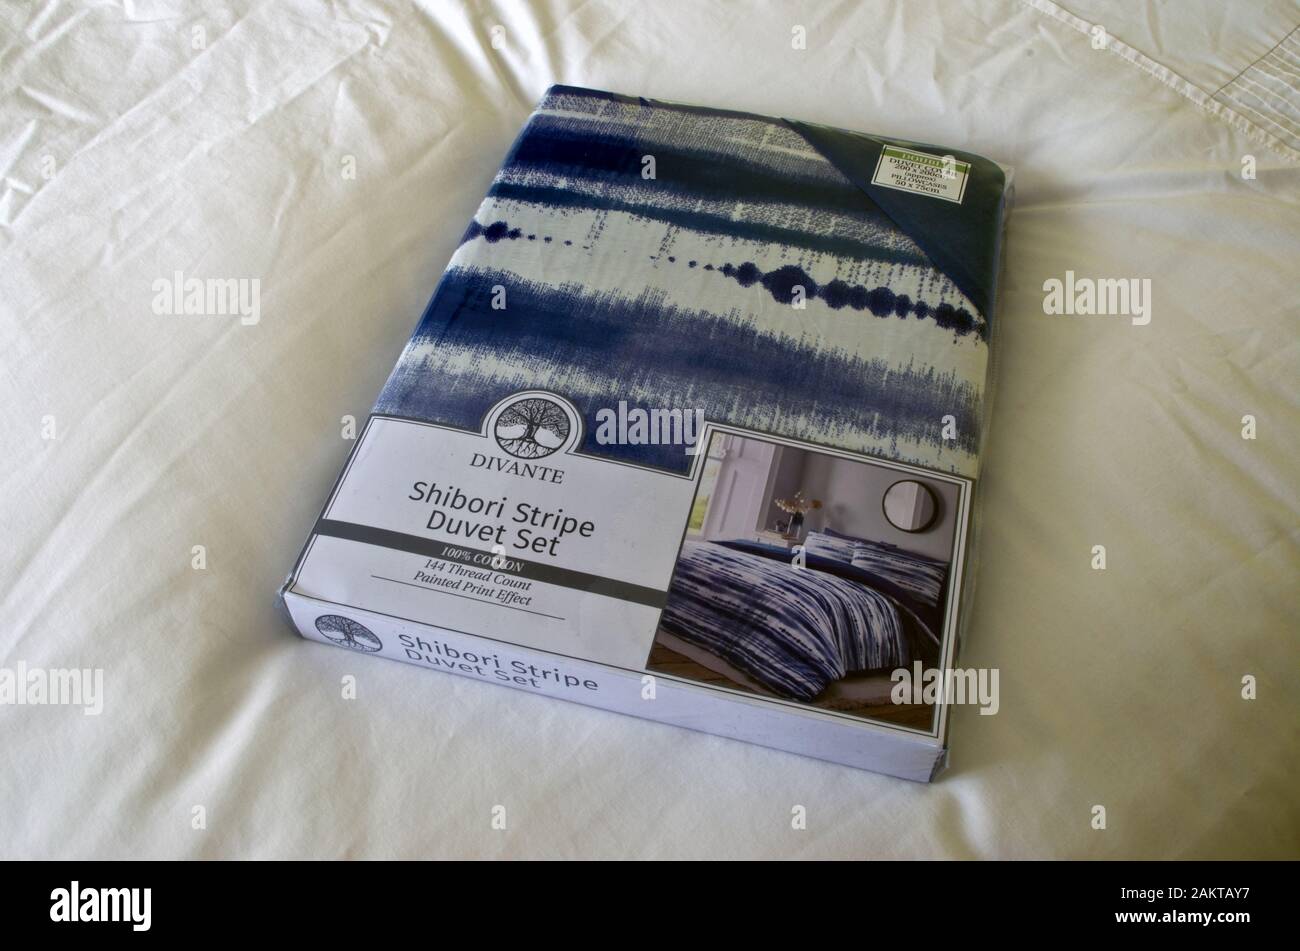 Divante Shibori Stripe 100% Cotton Duvet Bedding Set On A Bed Stock Photo